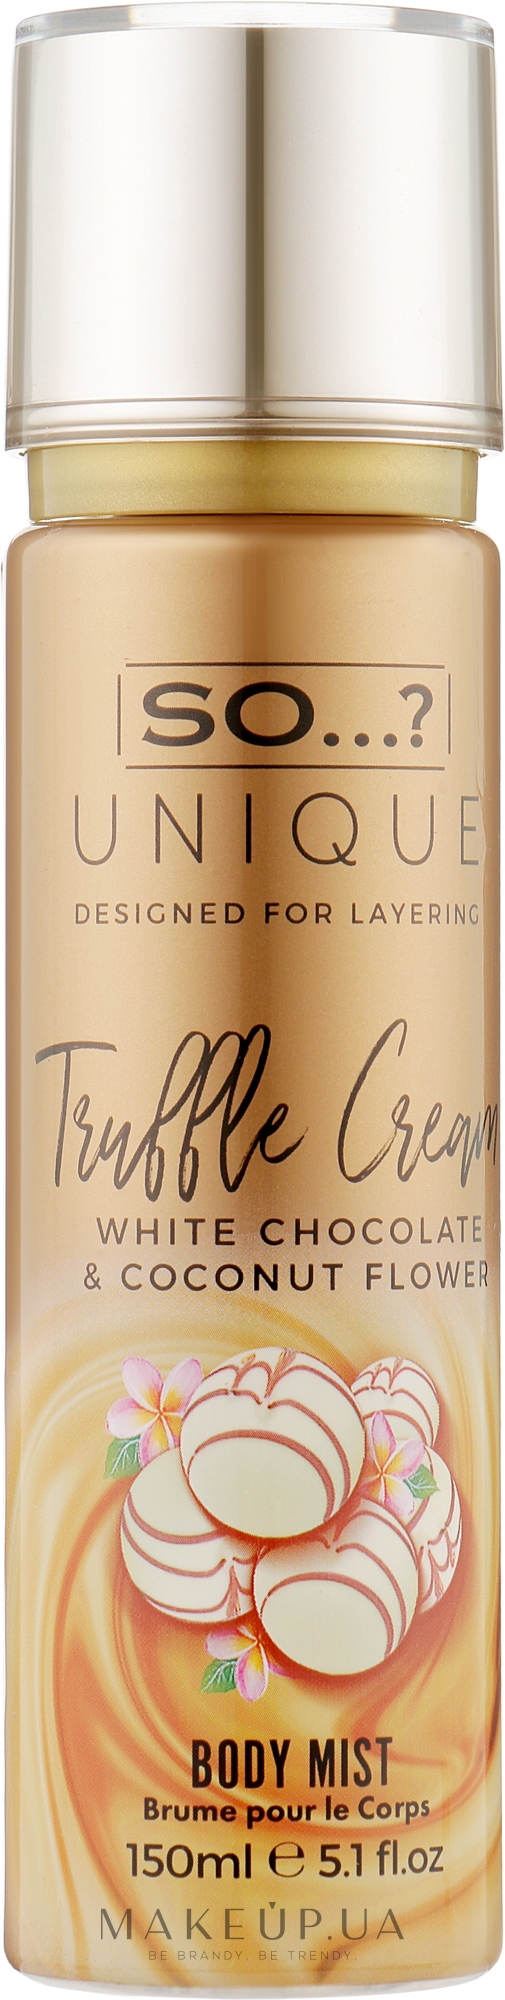 Спрей для тіла - So…? Unique Truffle Cream Body Mist — фото 150ml